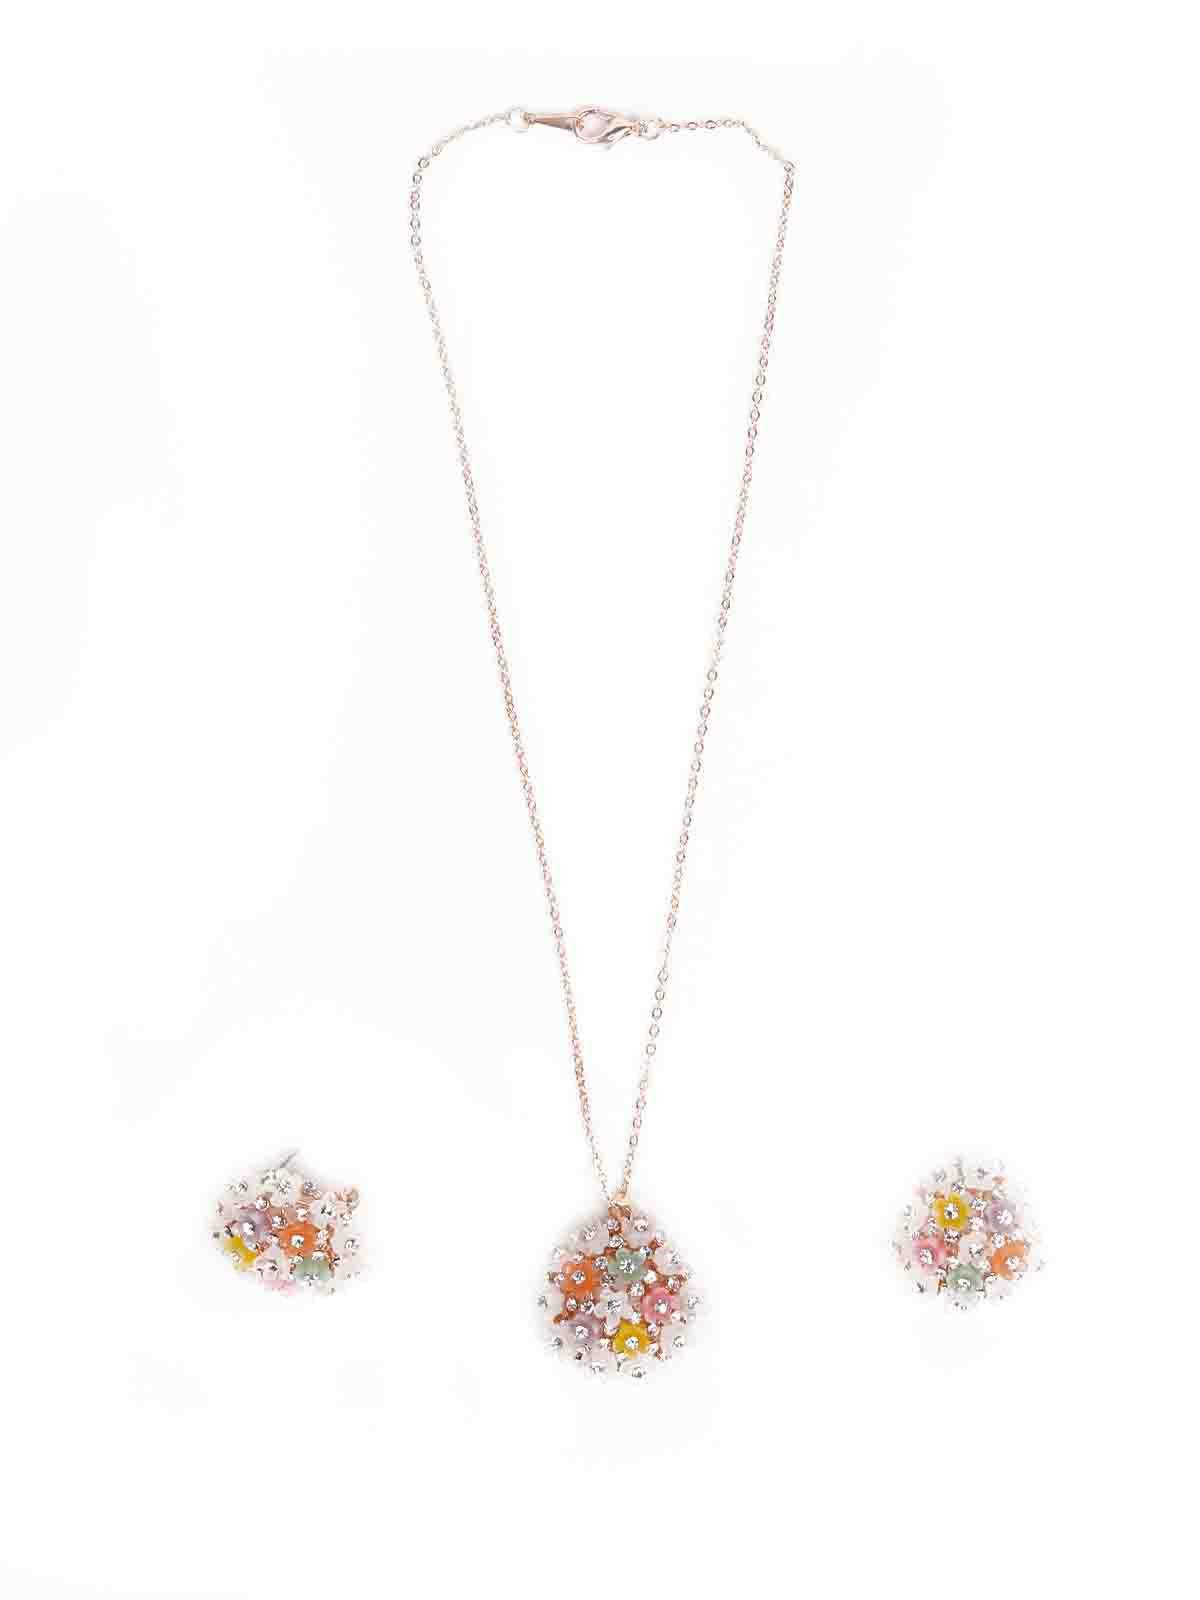 Women's Clustered Flowers Pendant Necklace Set - Odette